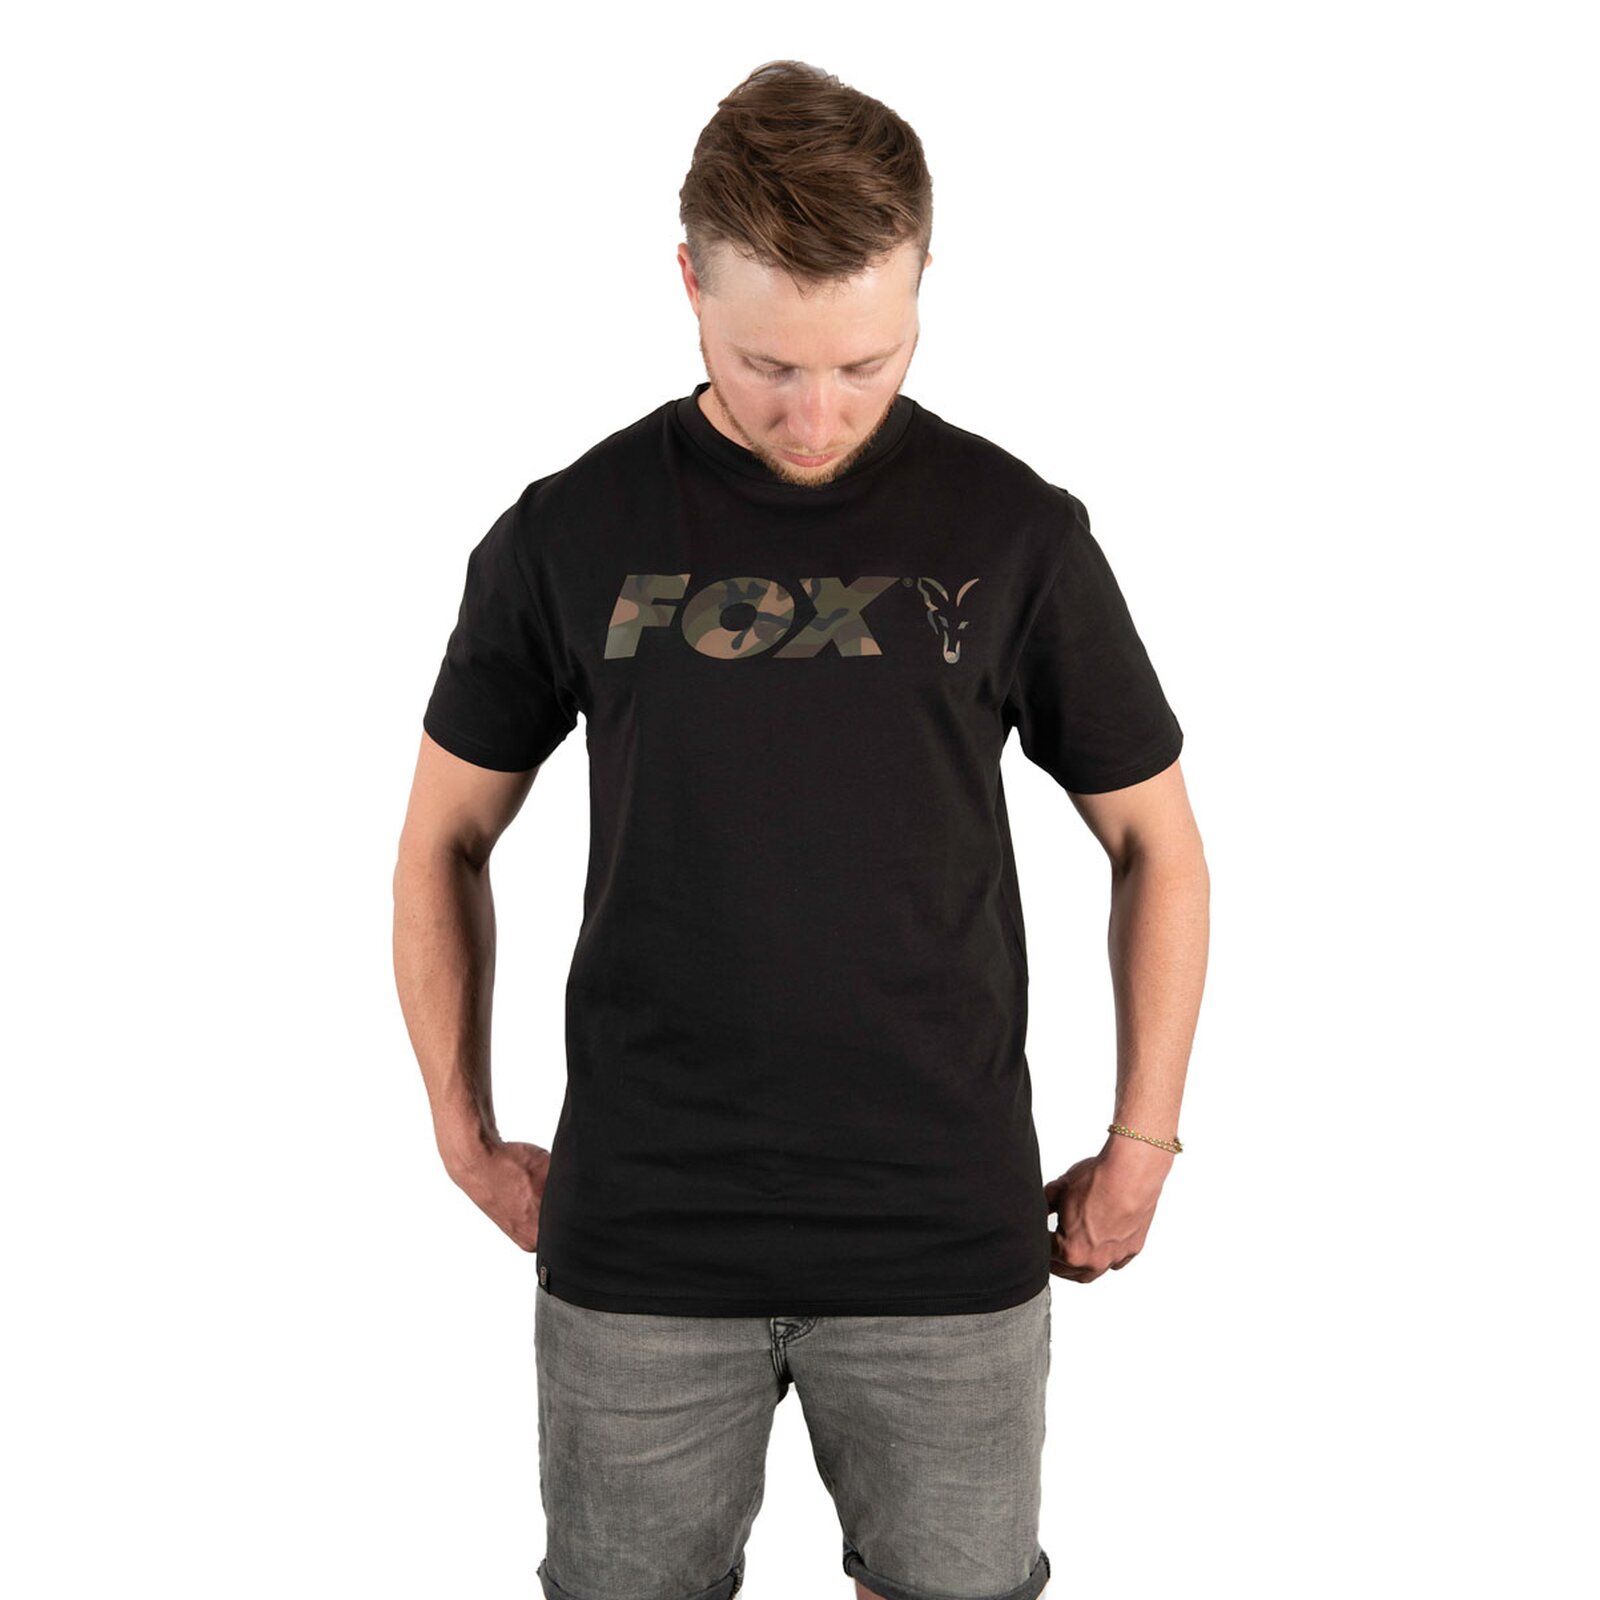 Fox Black/Camo Chest Print T-Shirt XXX Large